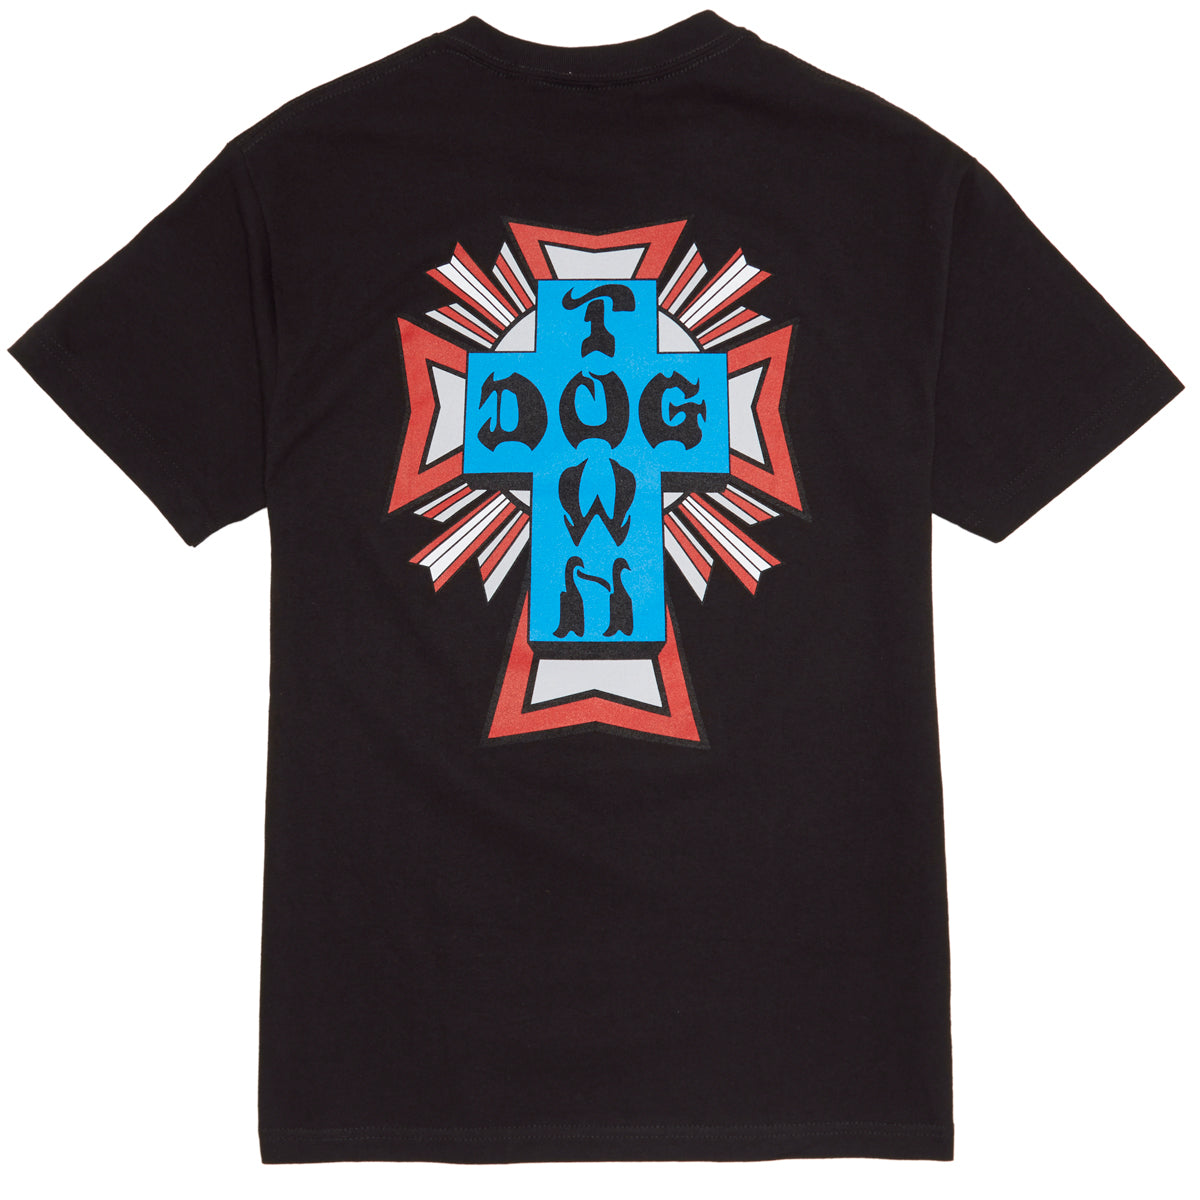 Dogtown Cross Logo T-Shirt - Black/Red/Blue/Grey image 1